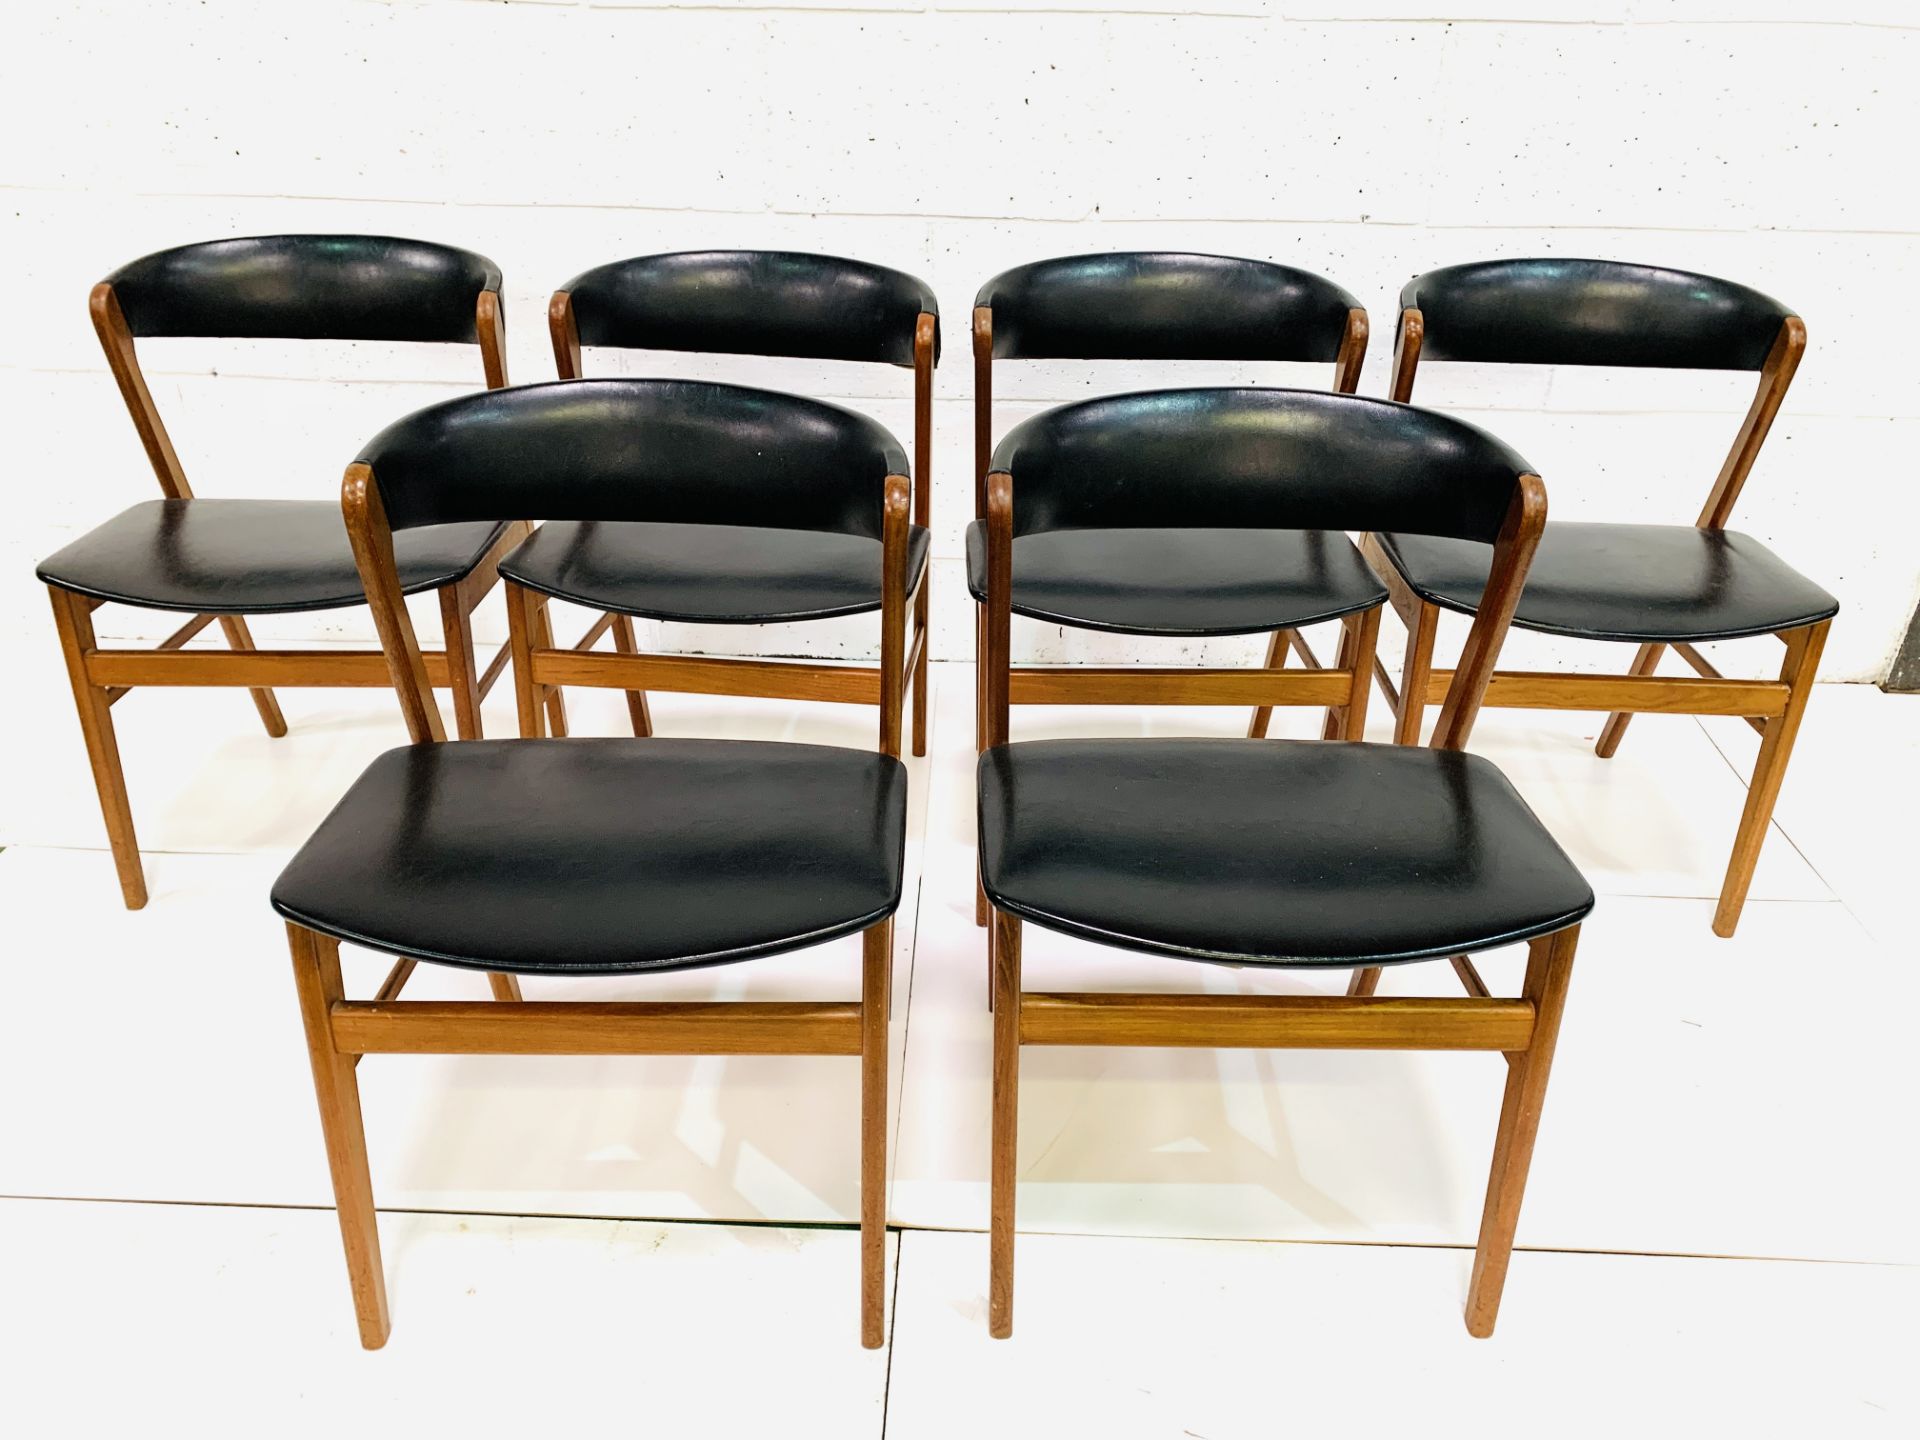 Six 1960's teak framed chairs